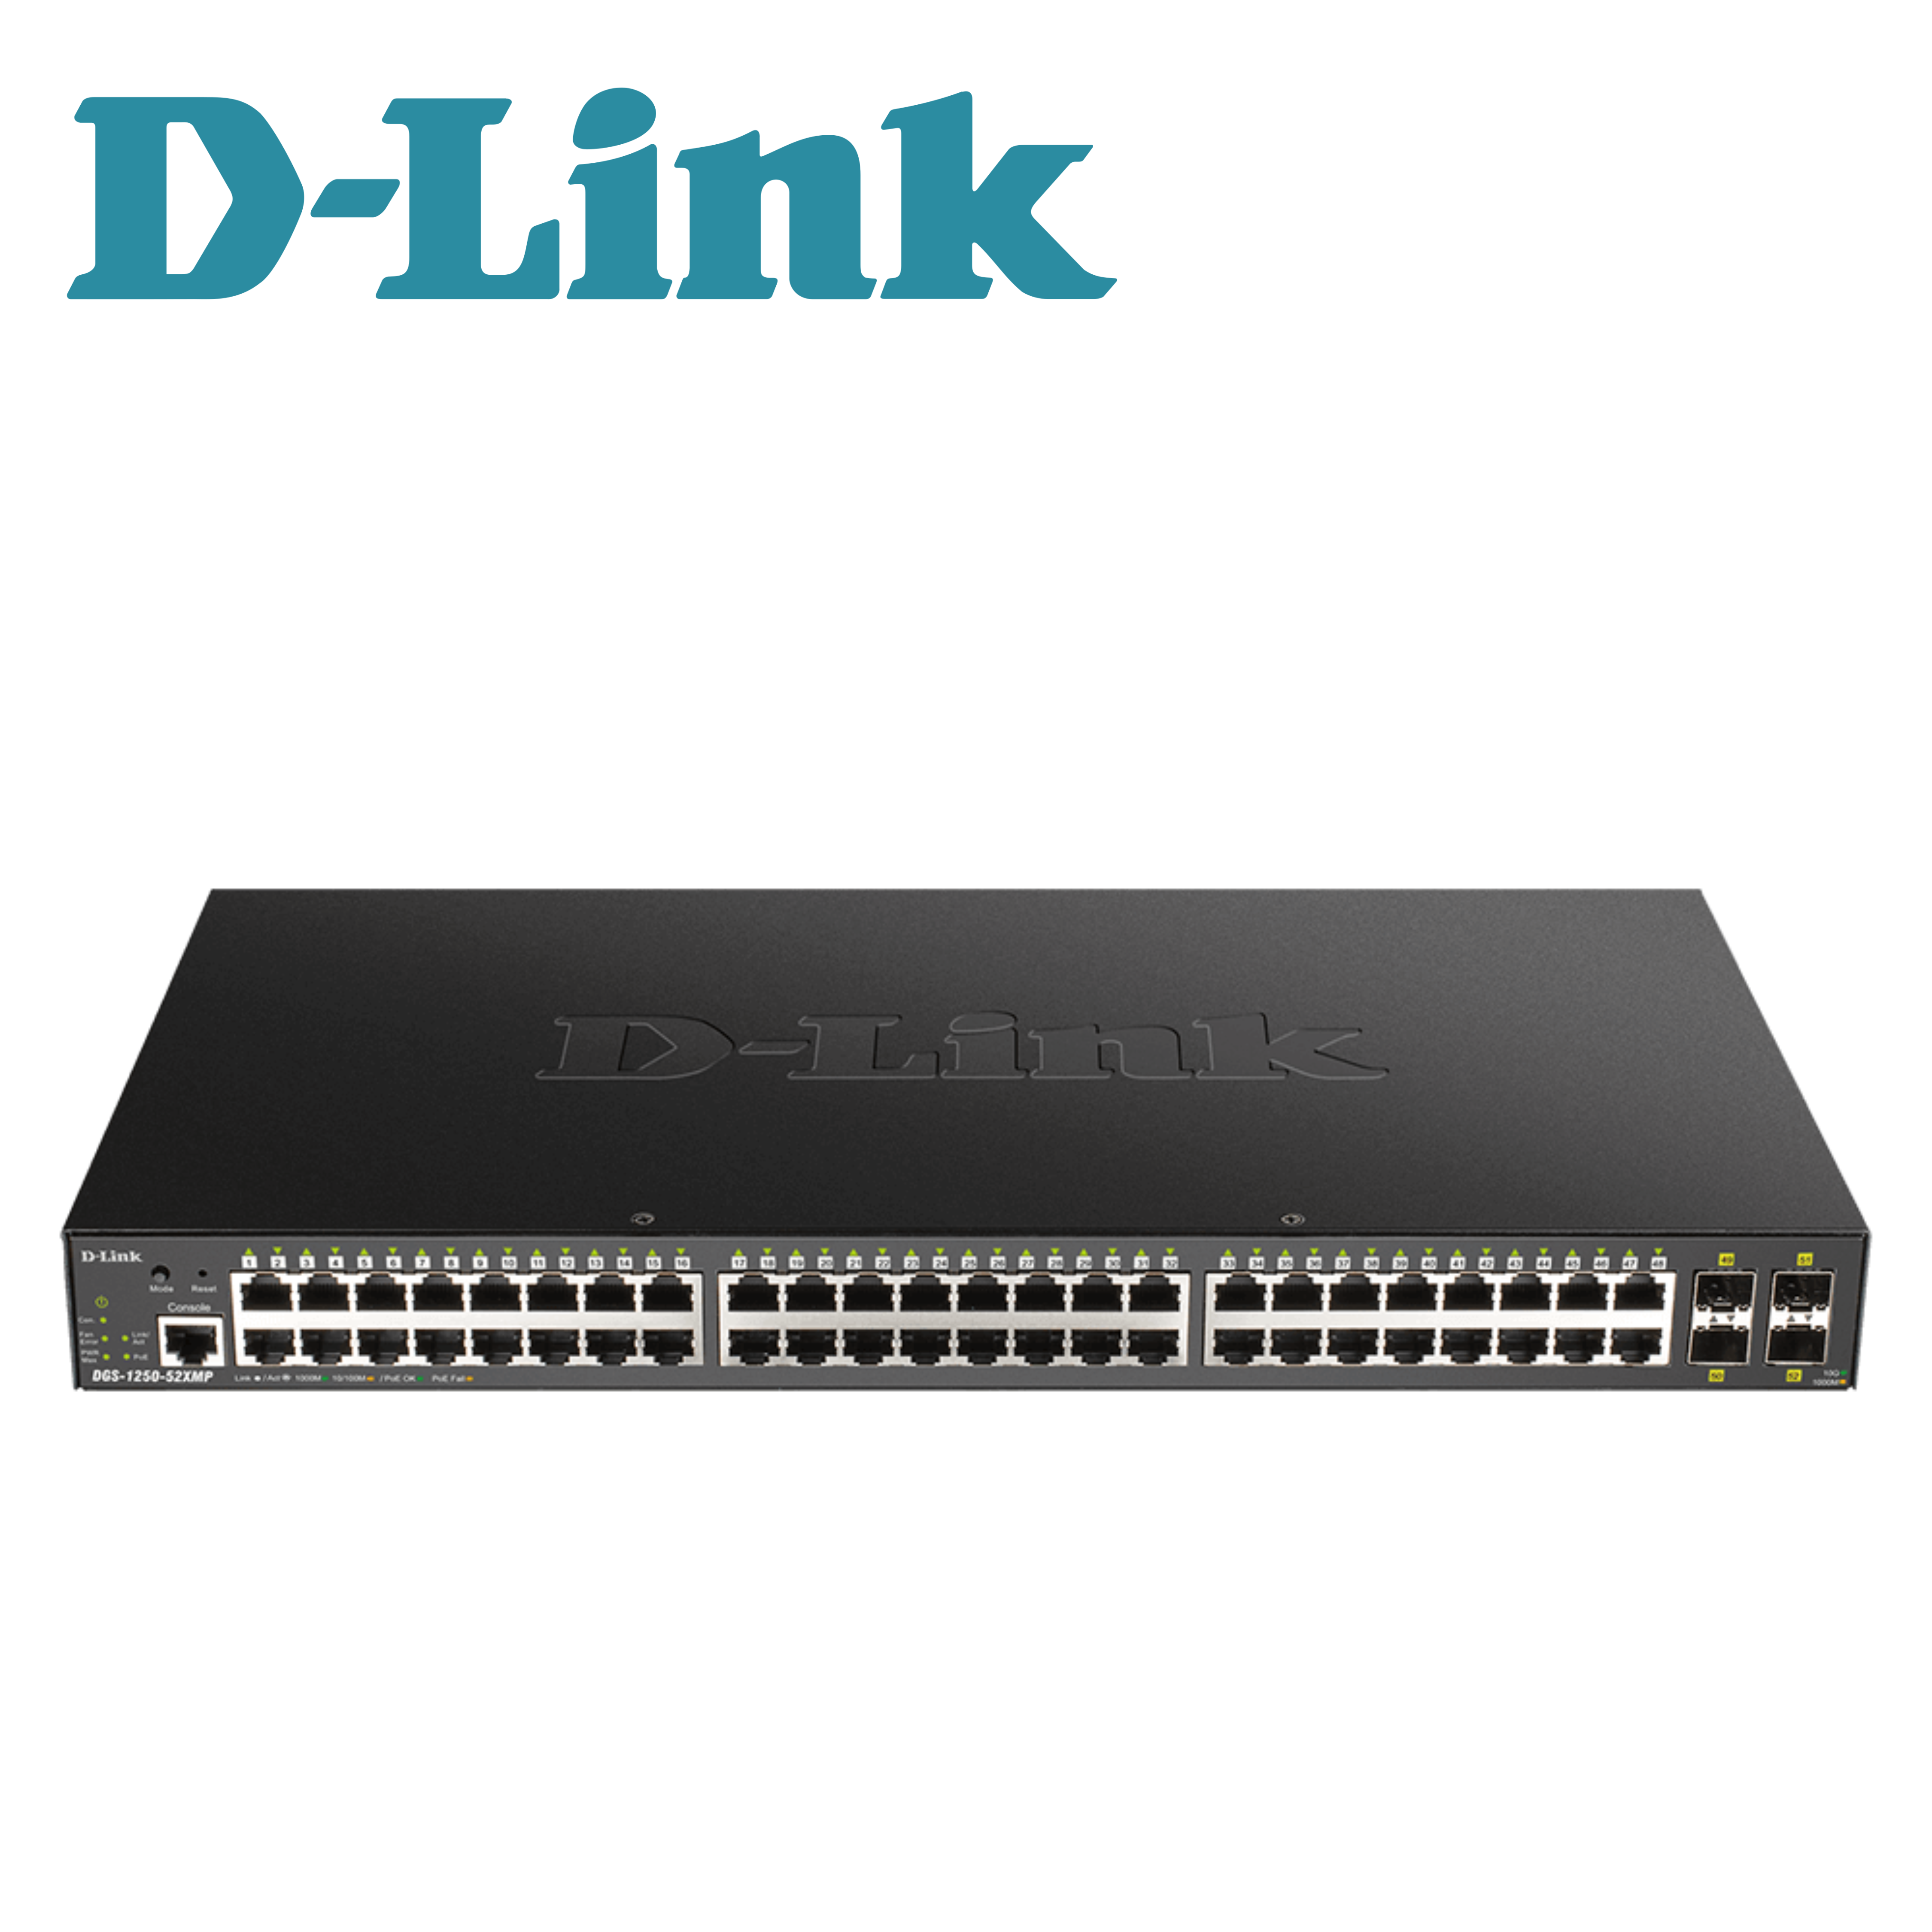 D-Link DGS-1250-XMP Series (28/52-Port 10-Gigabit Smart Managed PoE Switch)